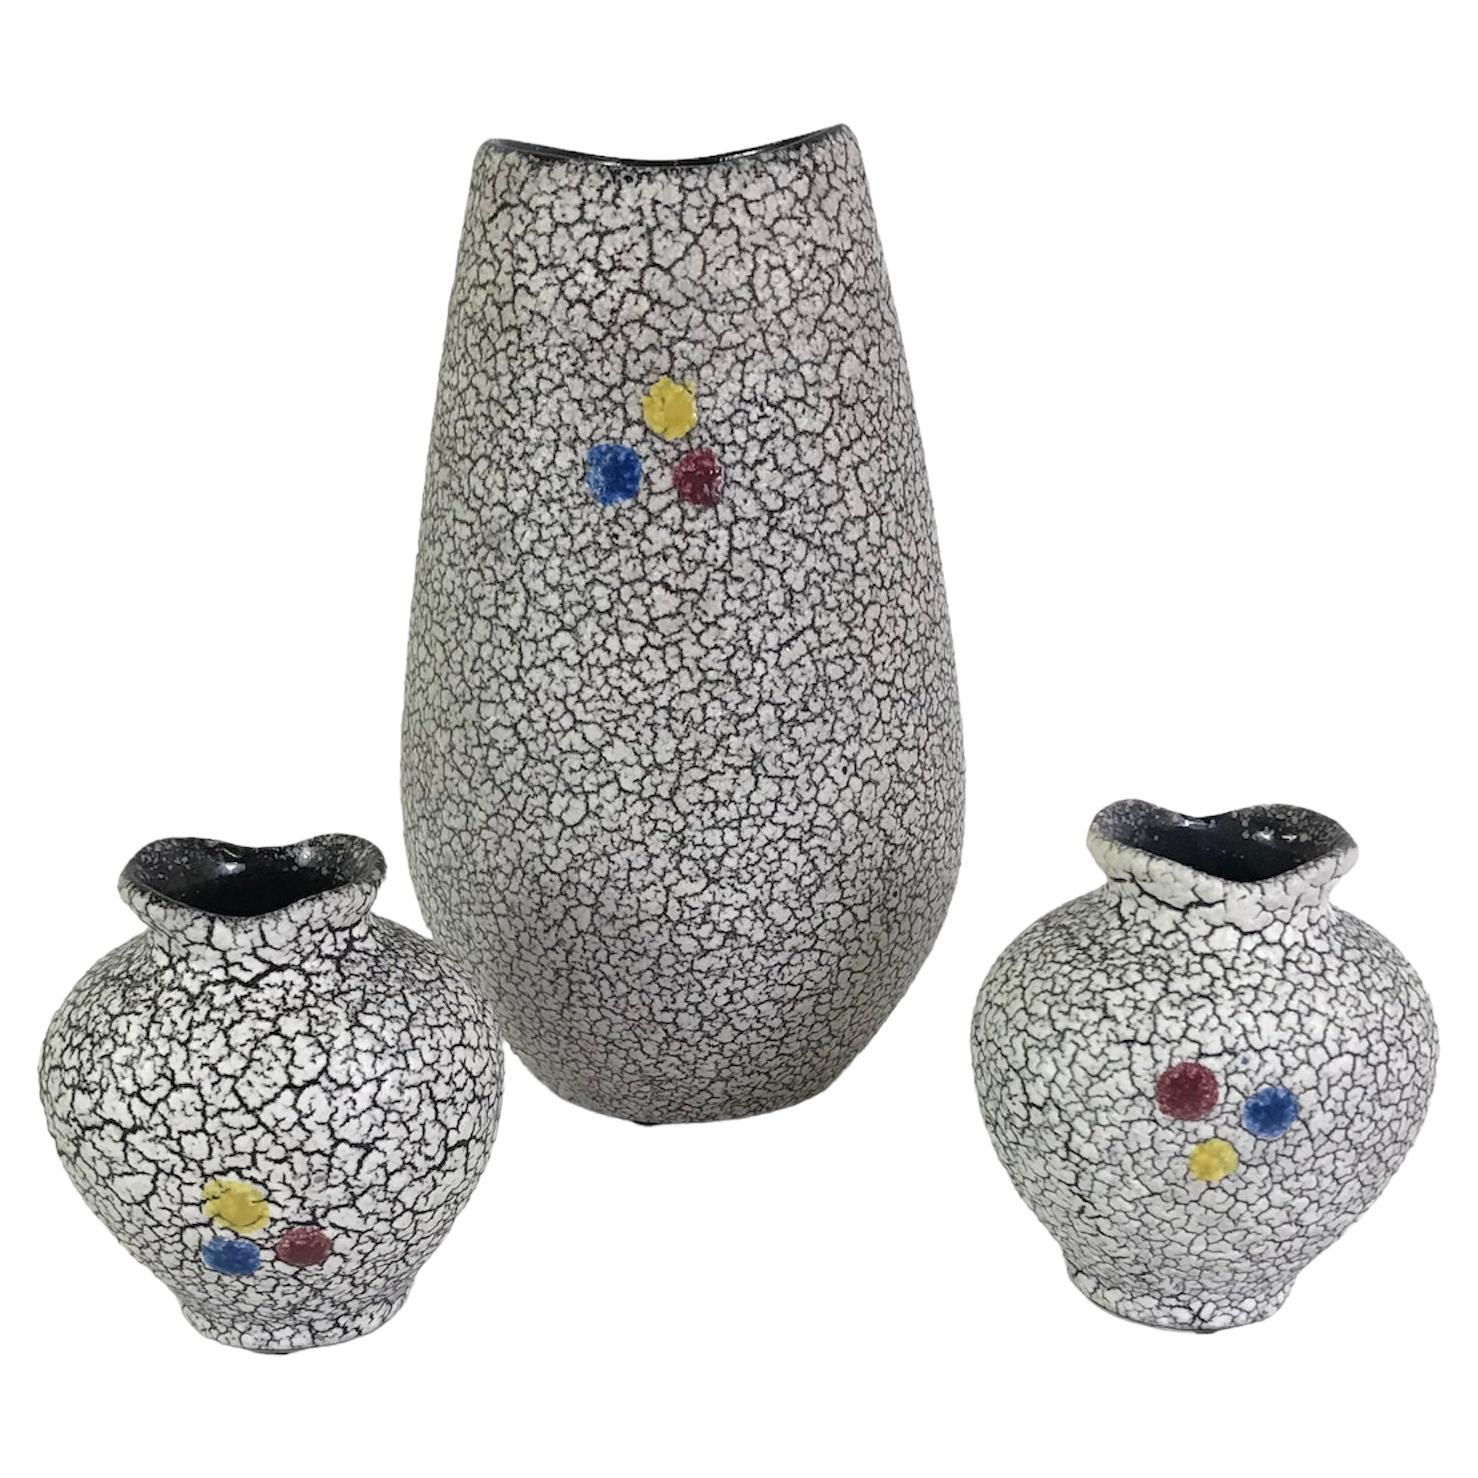 1958 Grouping of 3 Jopeko Keramik Crinkled Lava Glaze Ceramics Germany